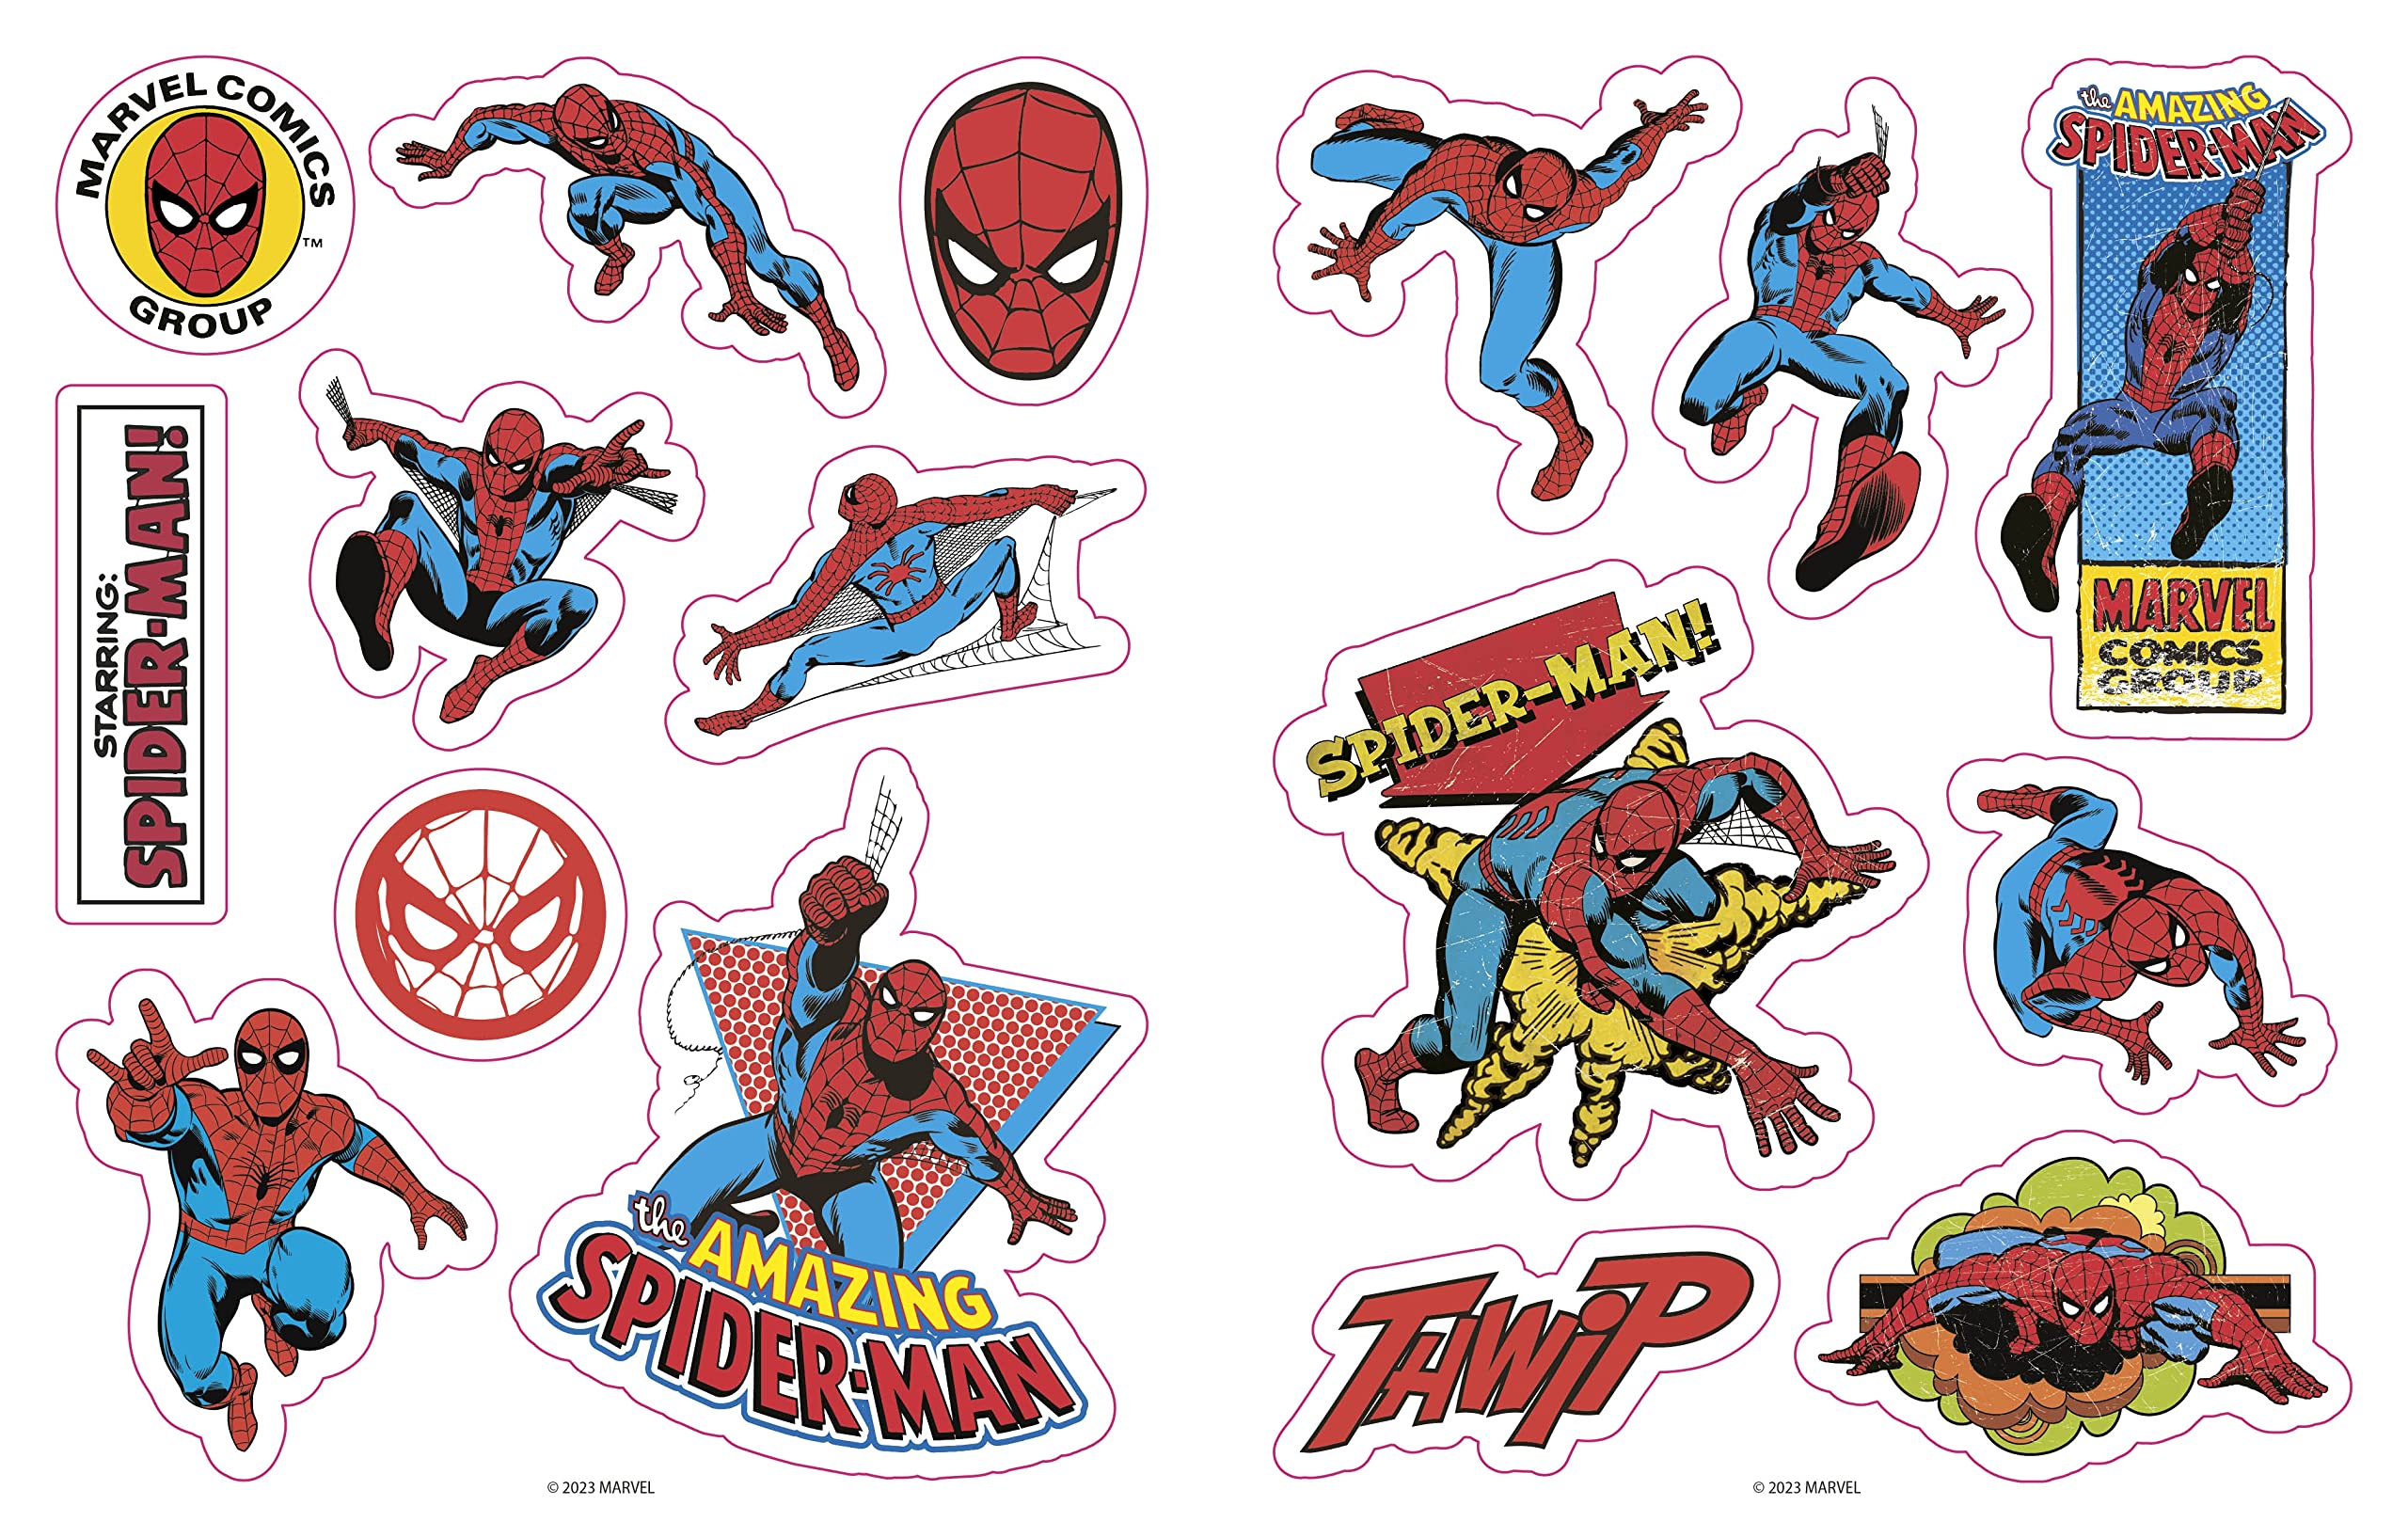 Marvel Sticker Anthology (DK Sticker Anthology)